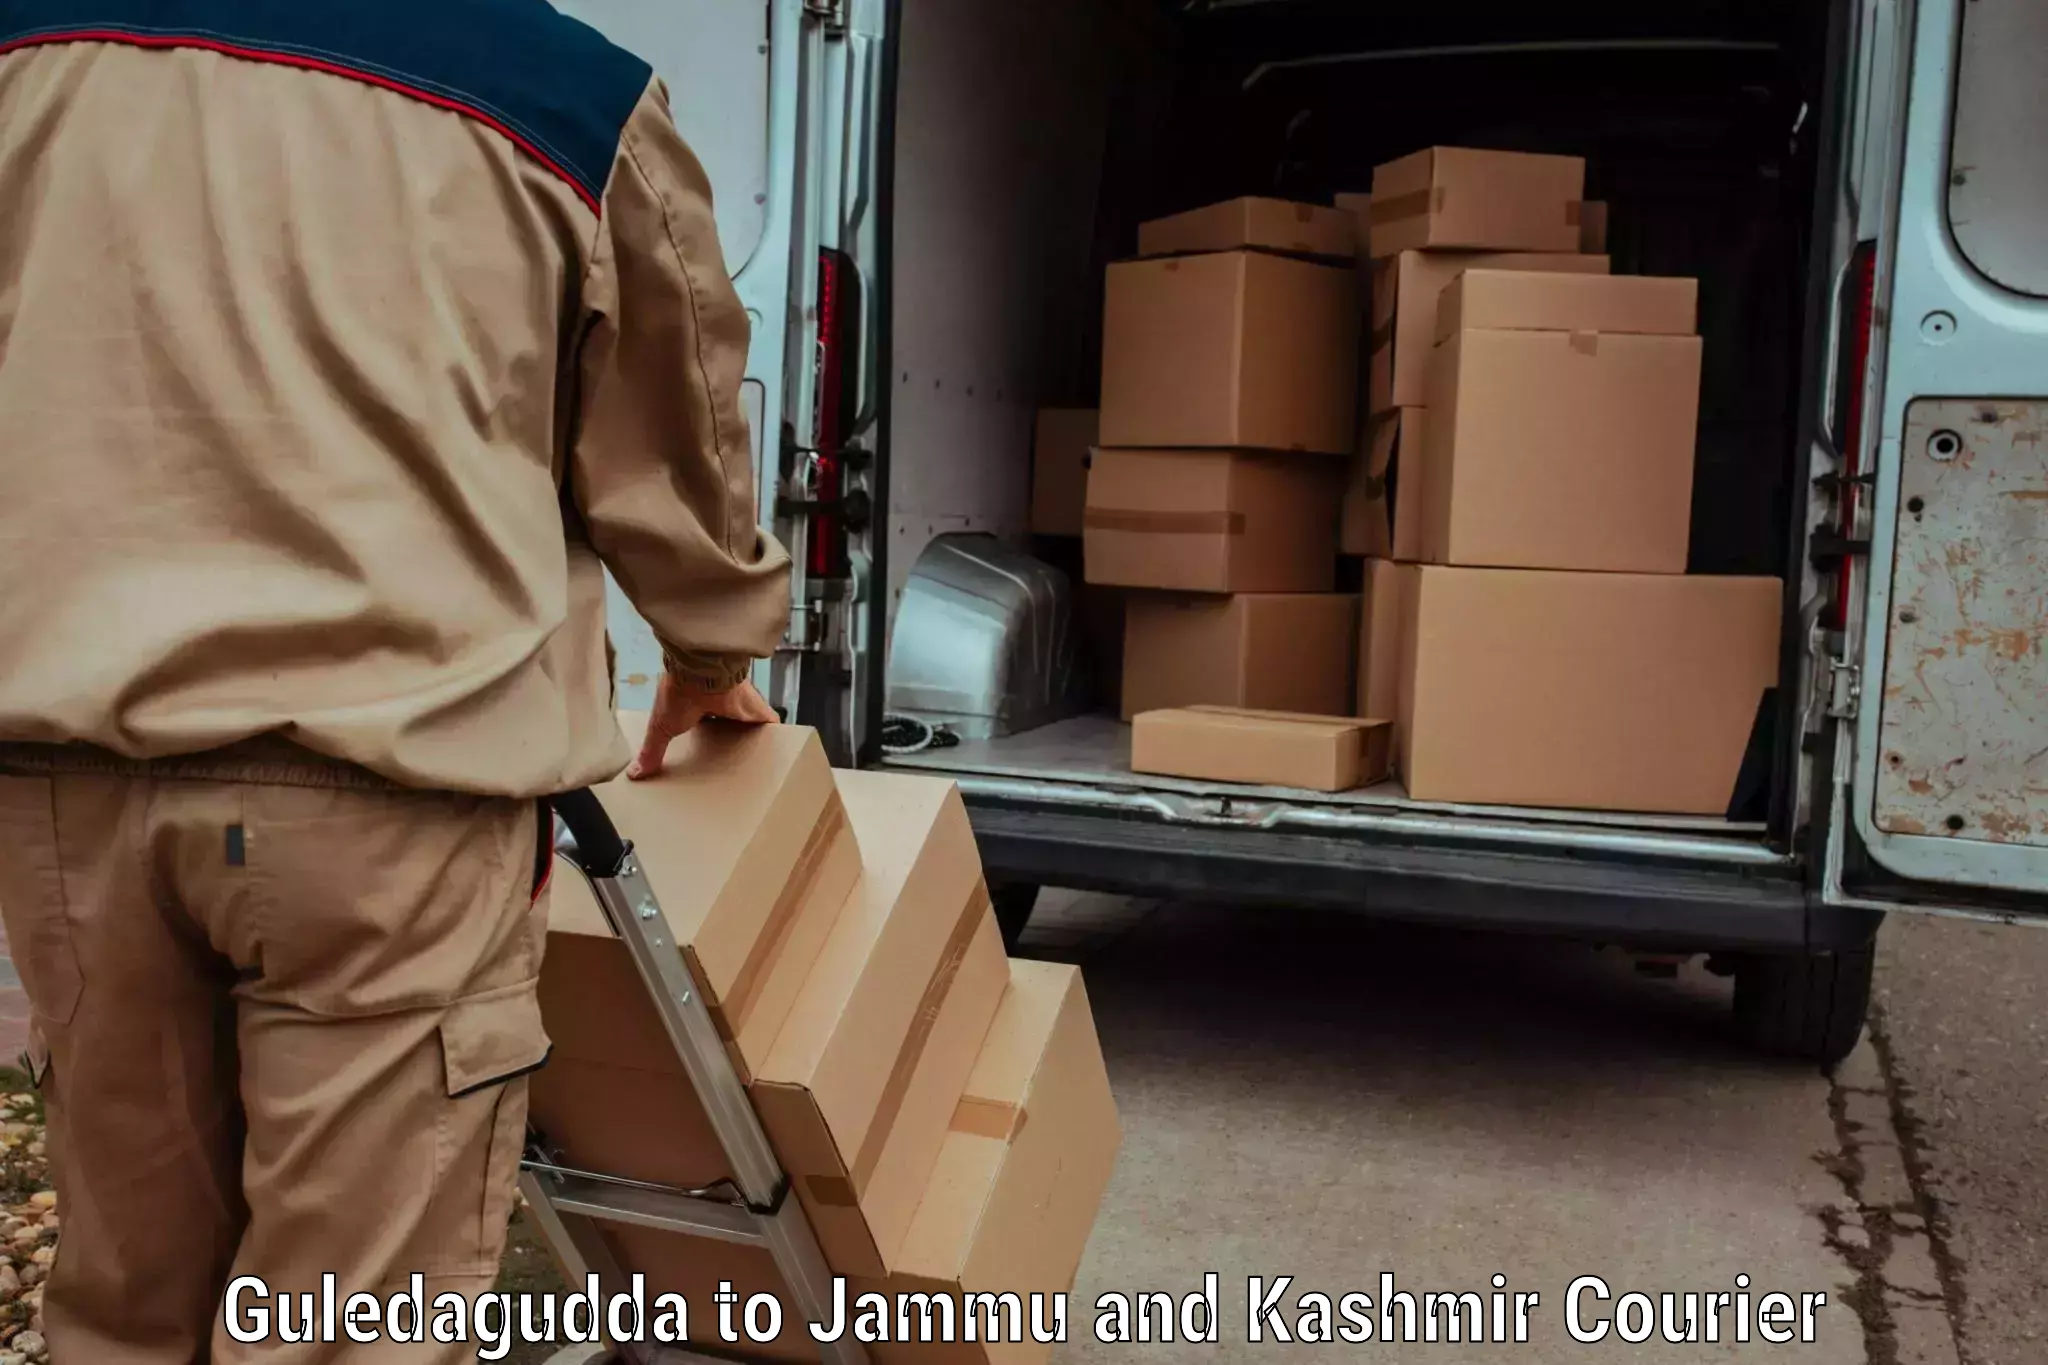 Package delivery network Guledagudda to Srinagar Kashmir